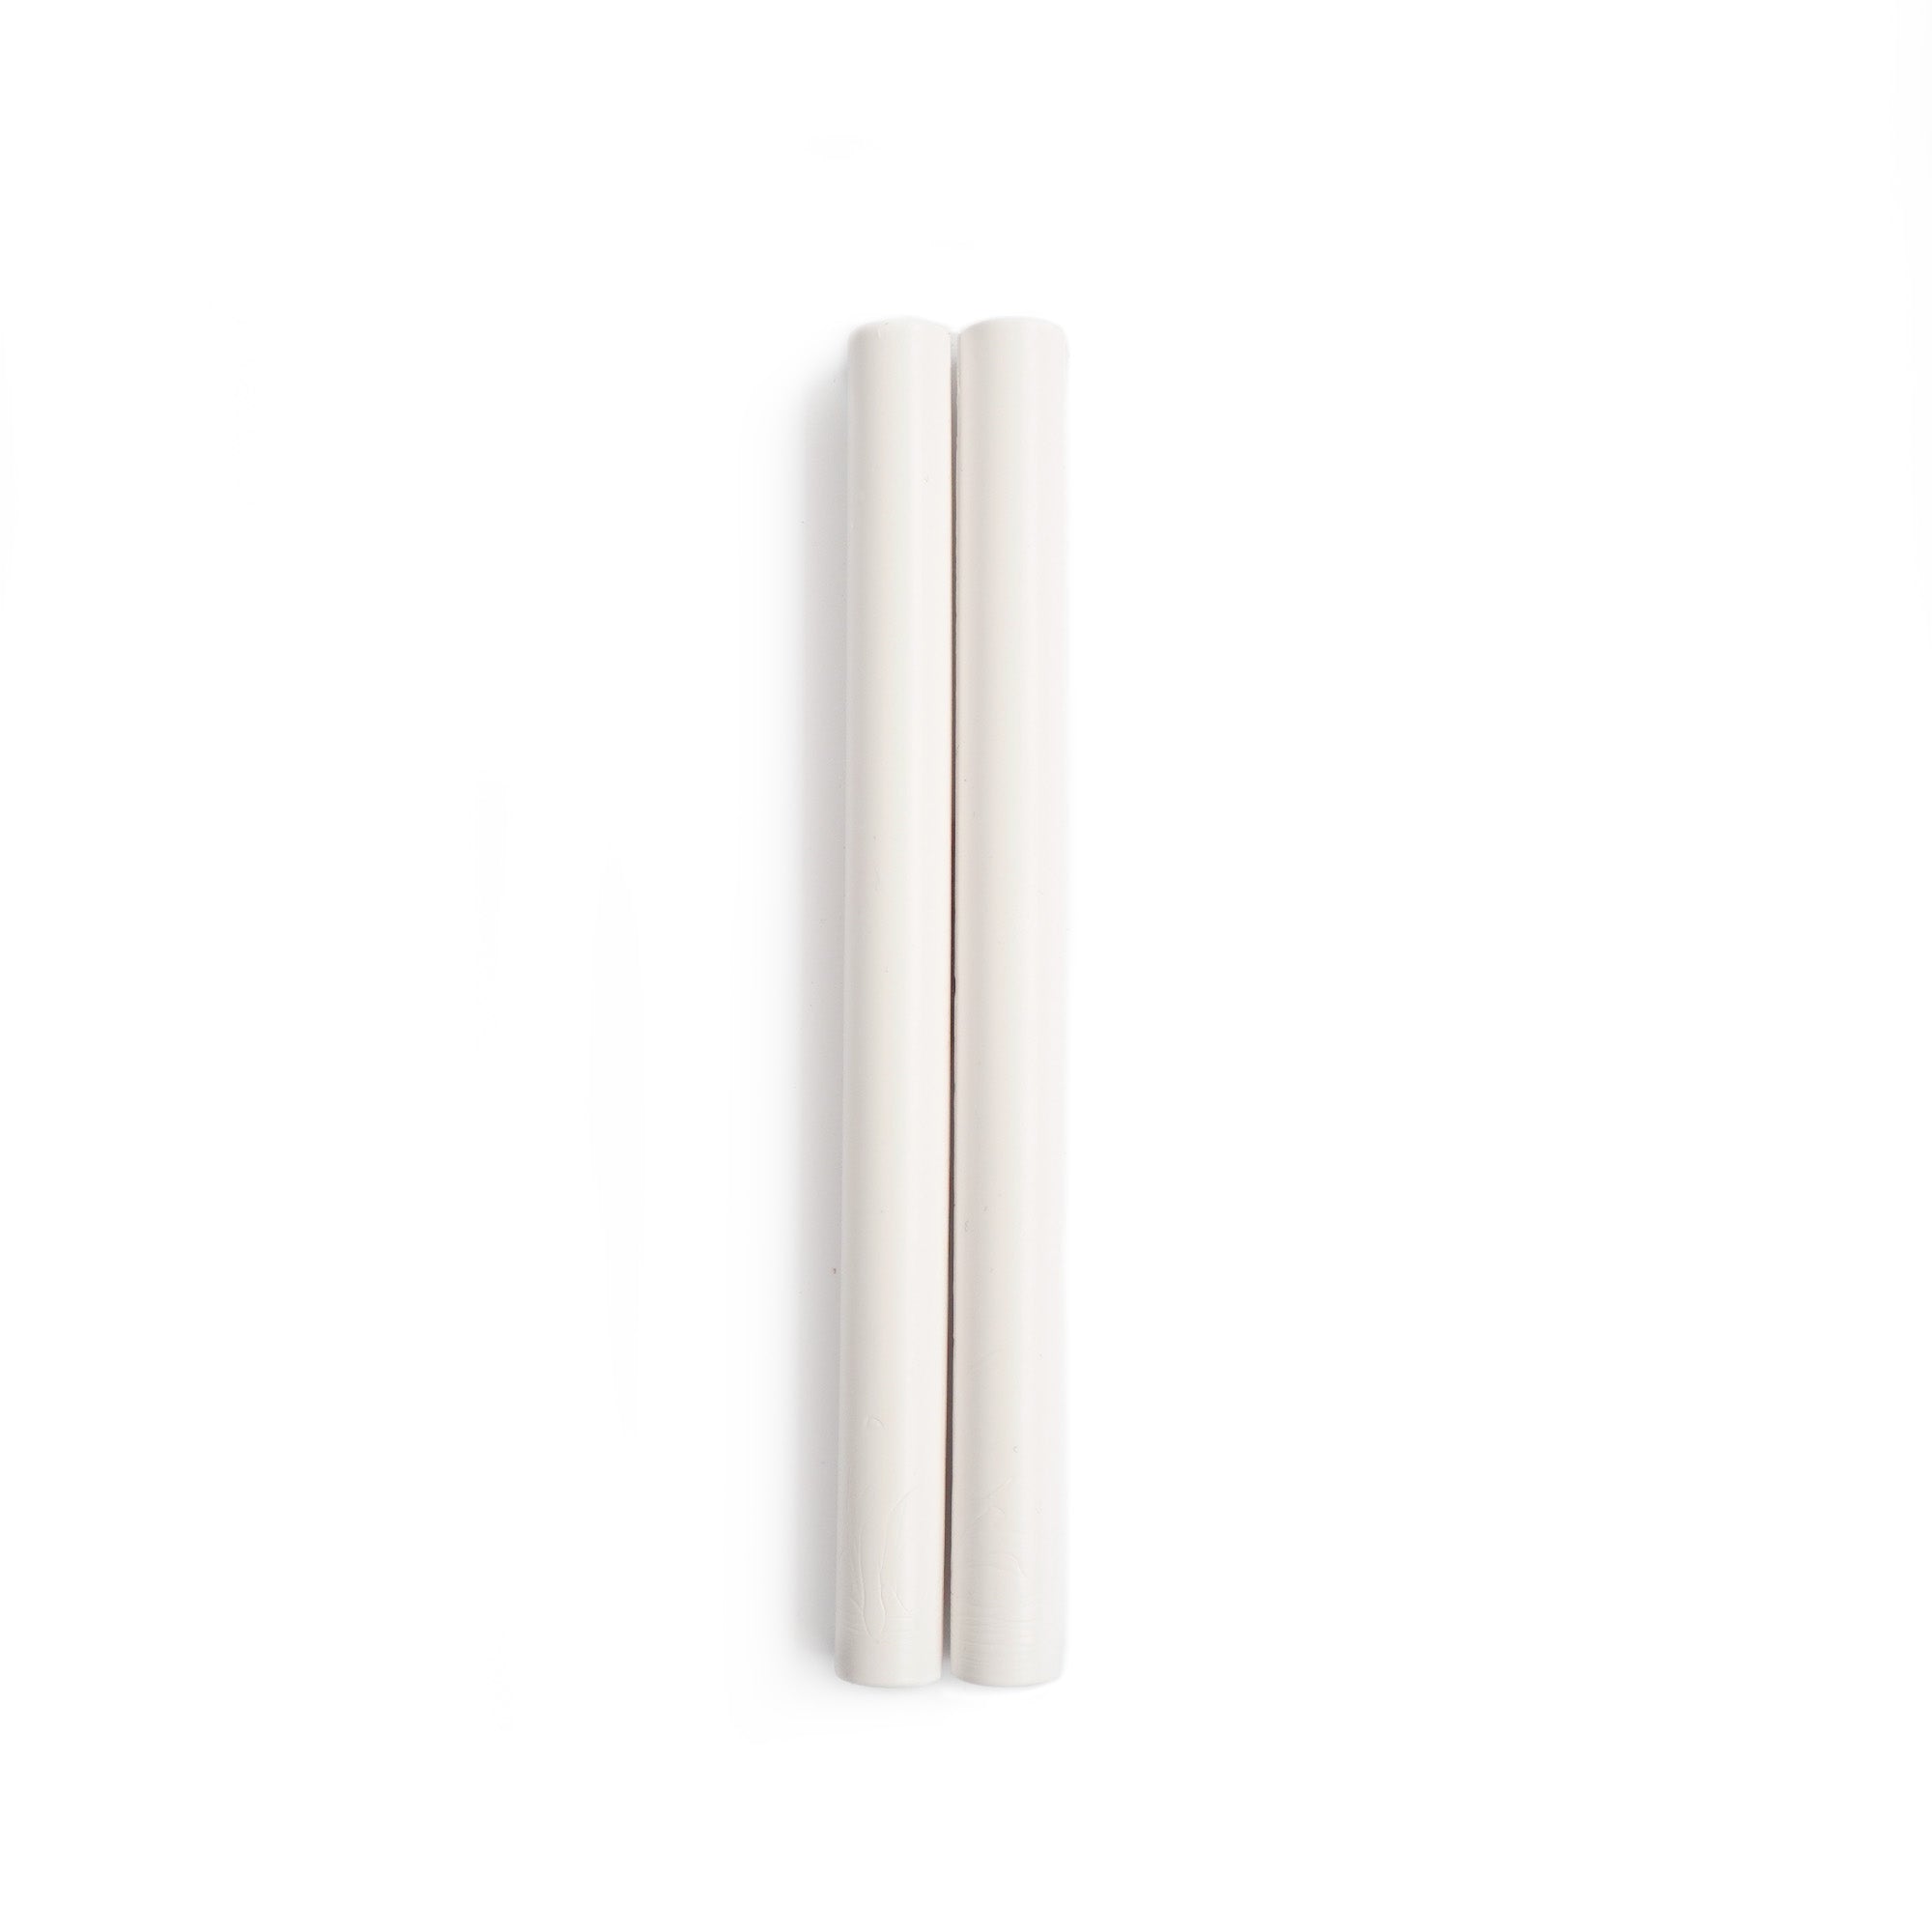 WHITE Glue Gun Sealing Wax (Box of 5 Sticks) – Silk & Willow